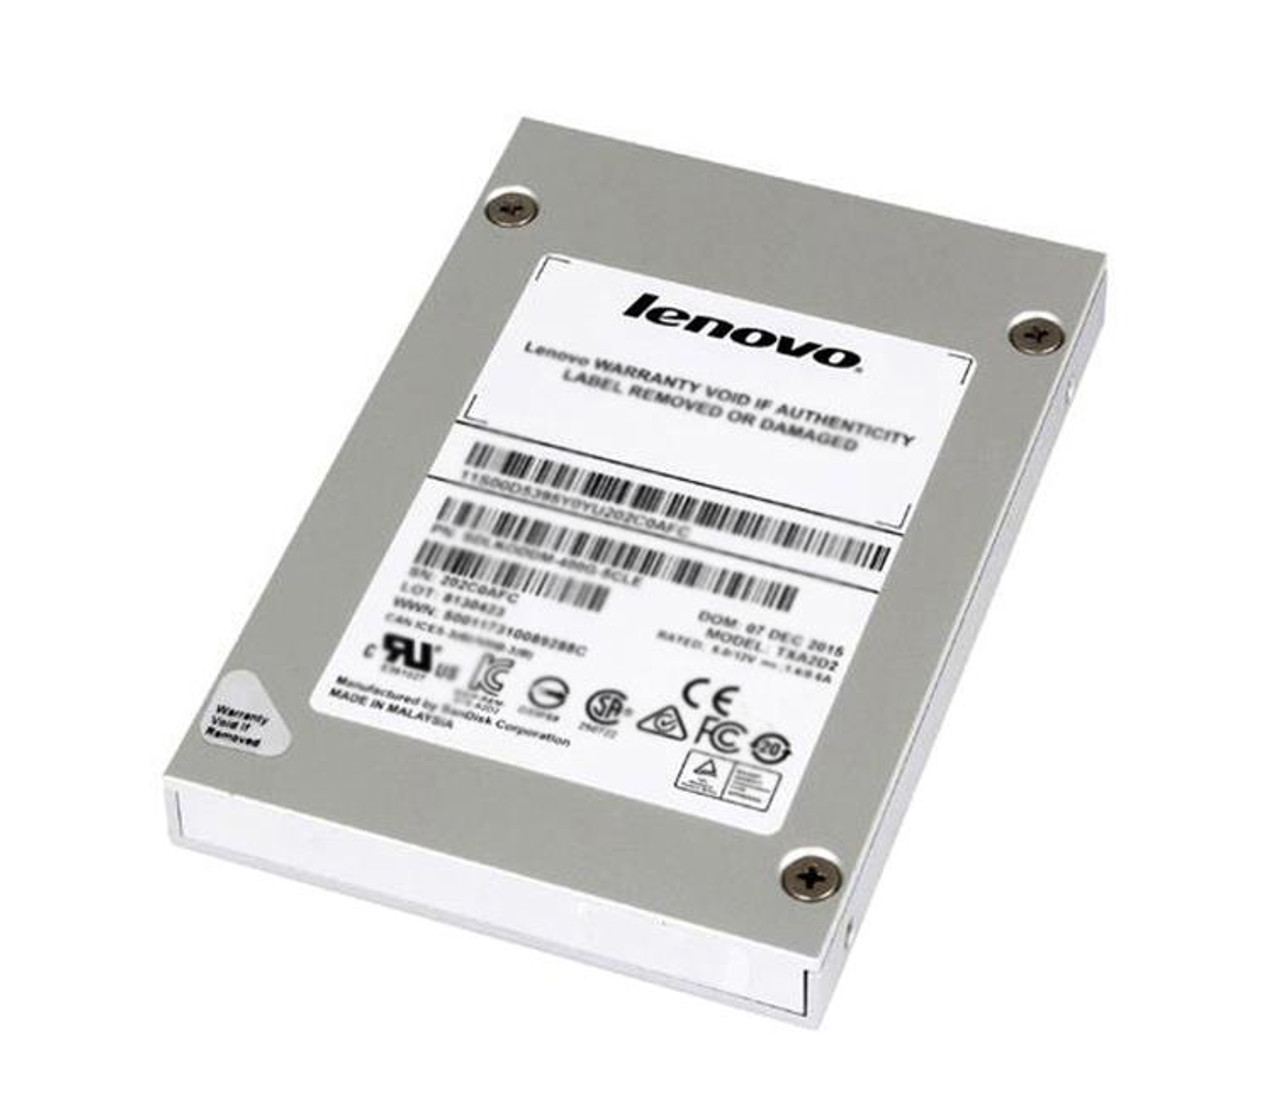 01KP060 Lenovo 7.68TB TLC SAS 12Gbps Hot Swap 2.5-inch Internal Solid State Drive (SSD)